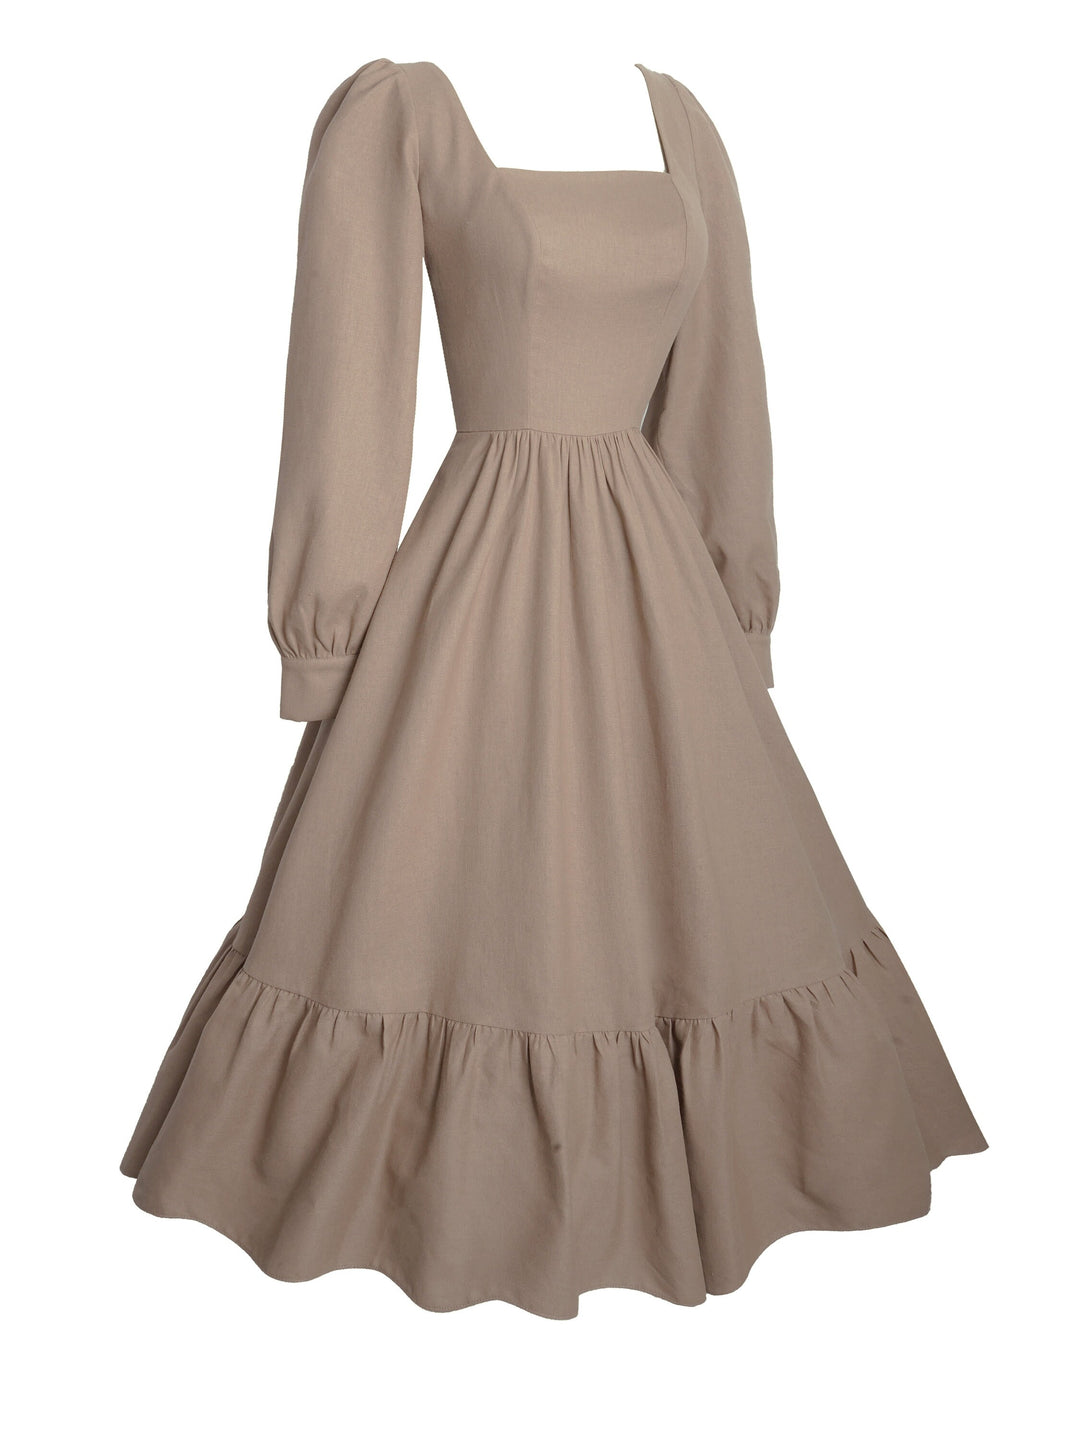 MTO - Mary Dress in Sephia Linen